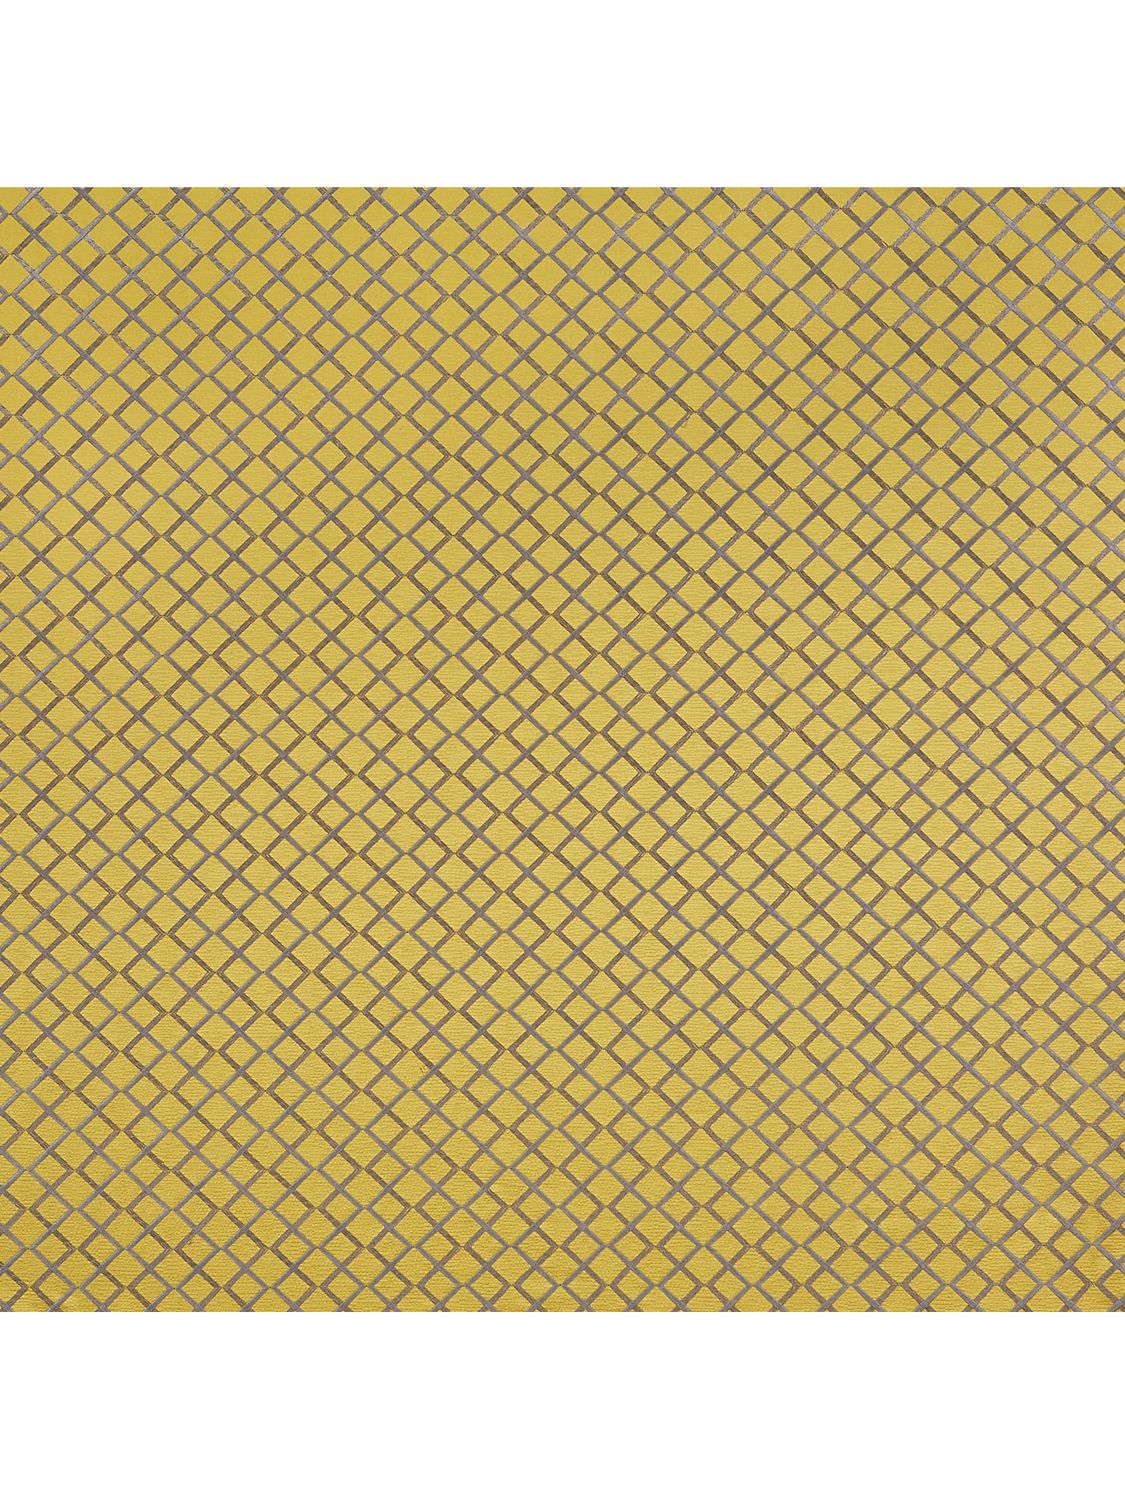 Prestigious Textiles Magnasco Furnishing Fabric, Acacia